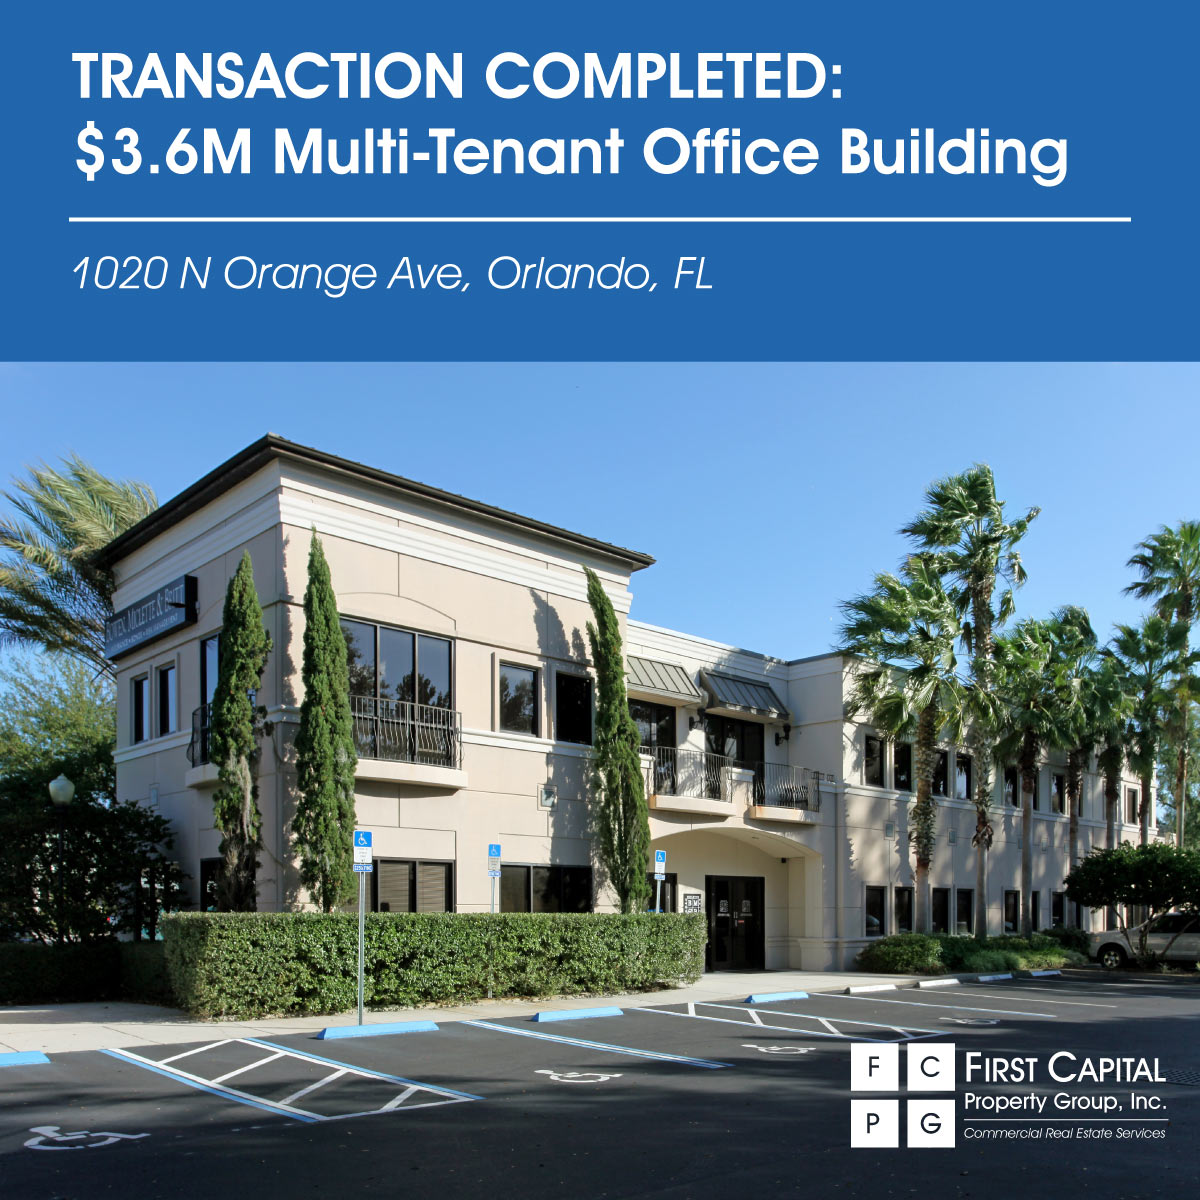 1020 N Orange Office Building Transaction Completed